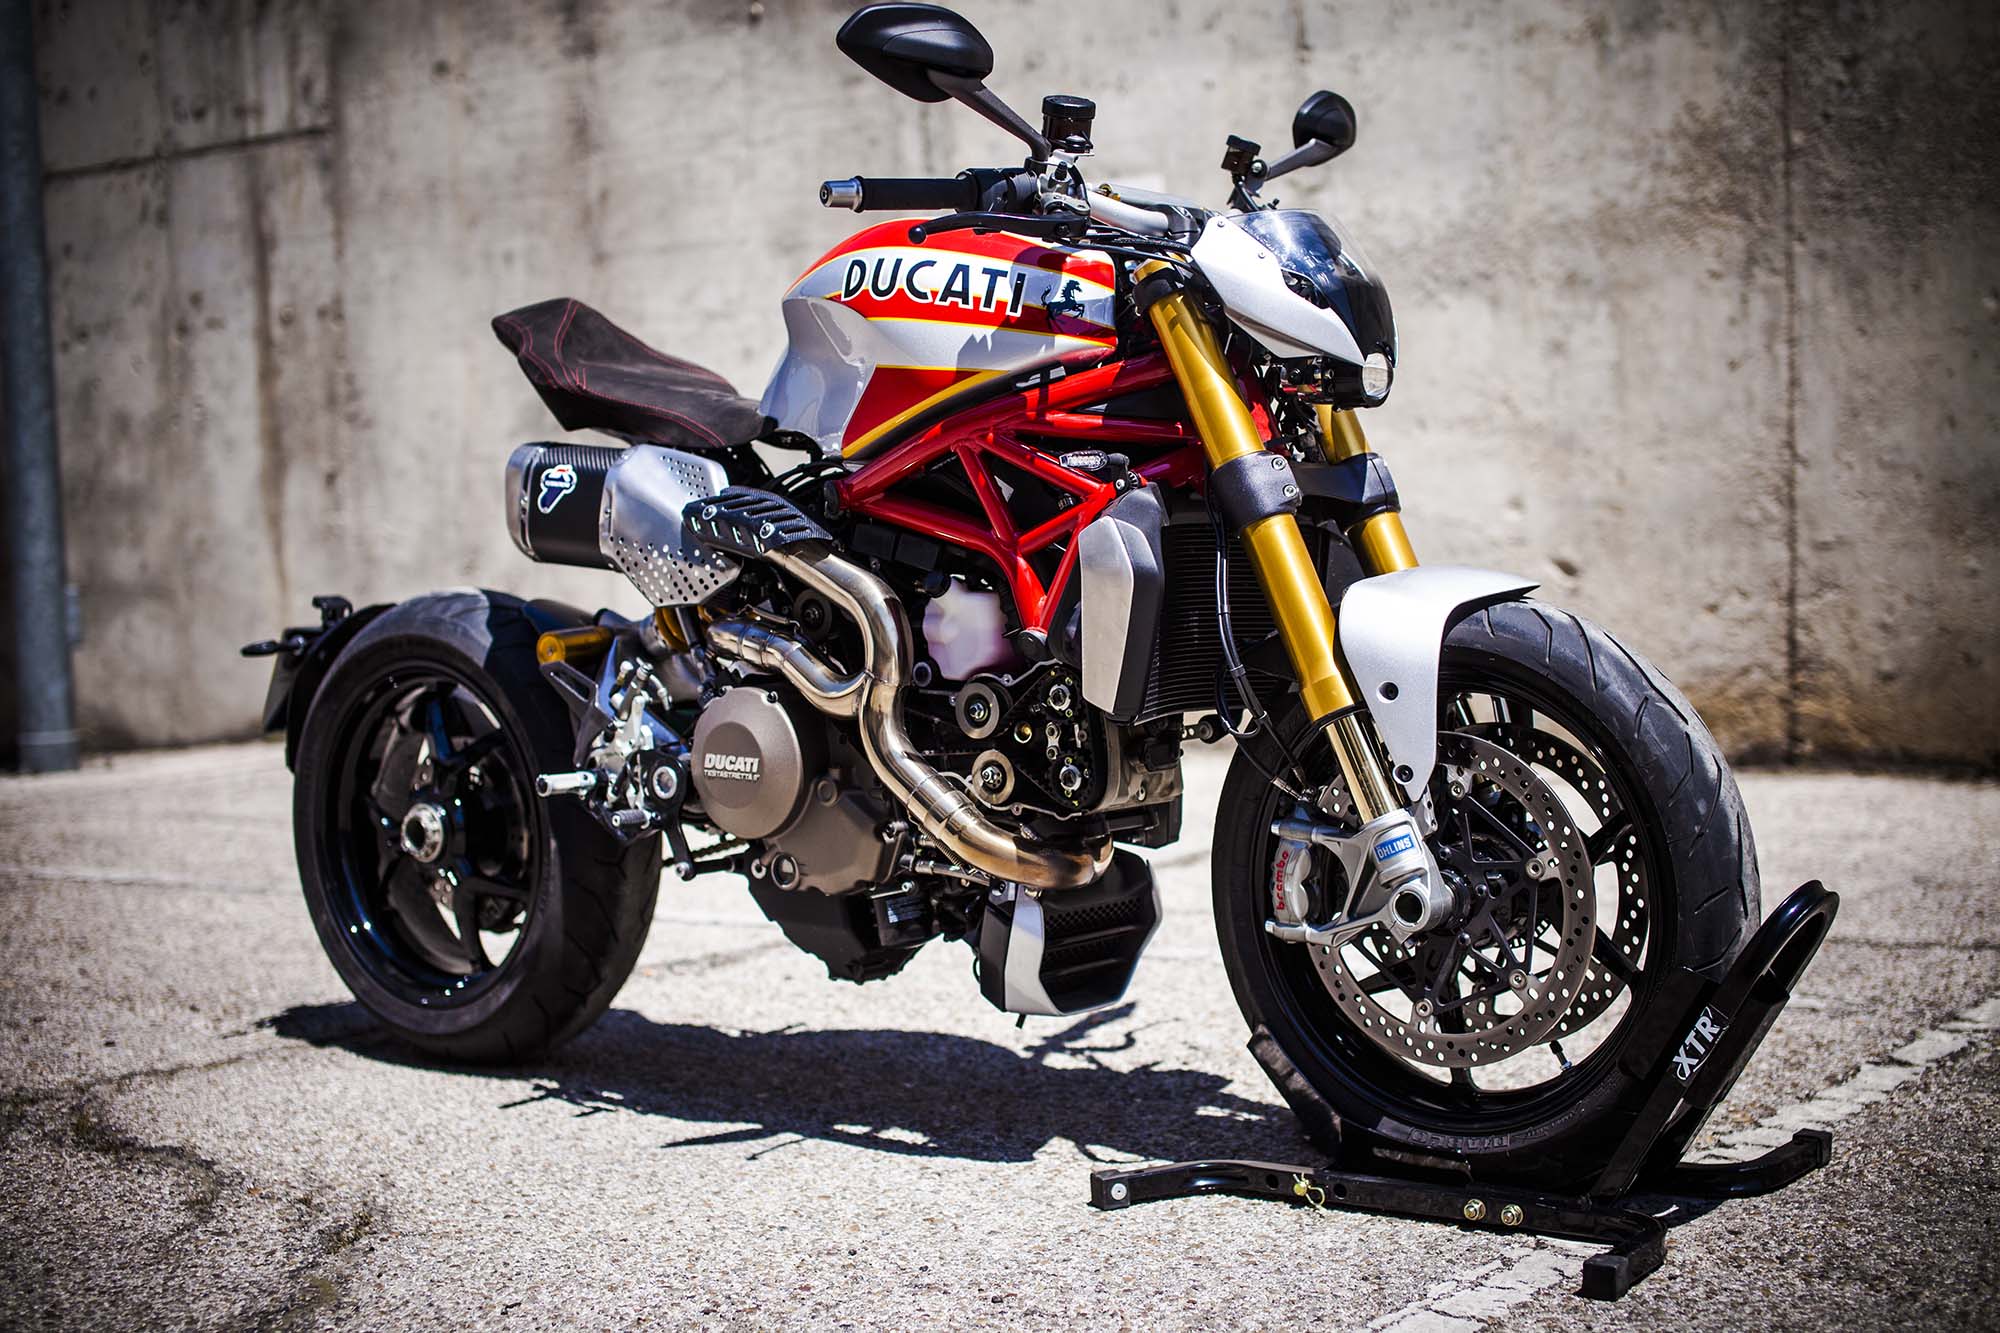 Ducati debut radical new MotoGP seat unit and exhaust at 